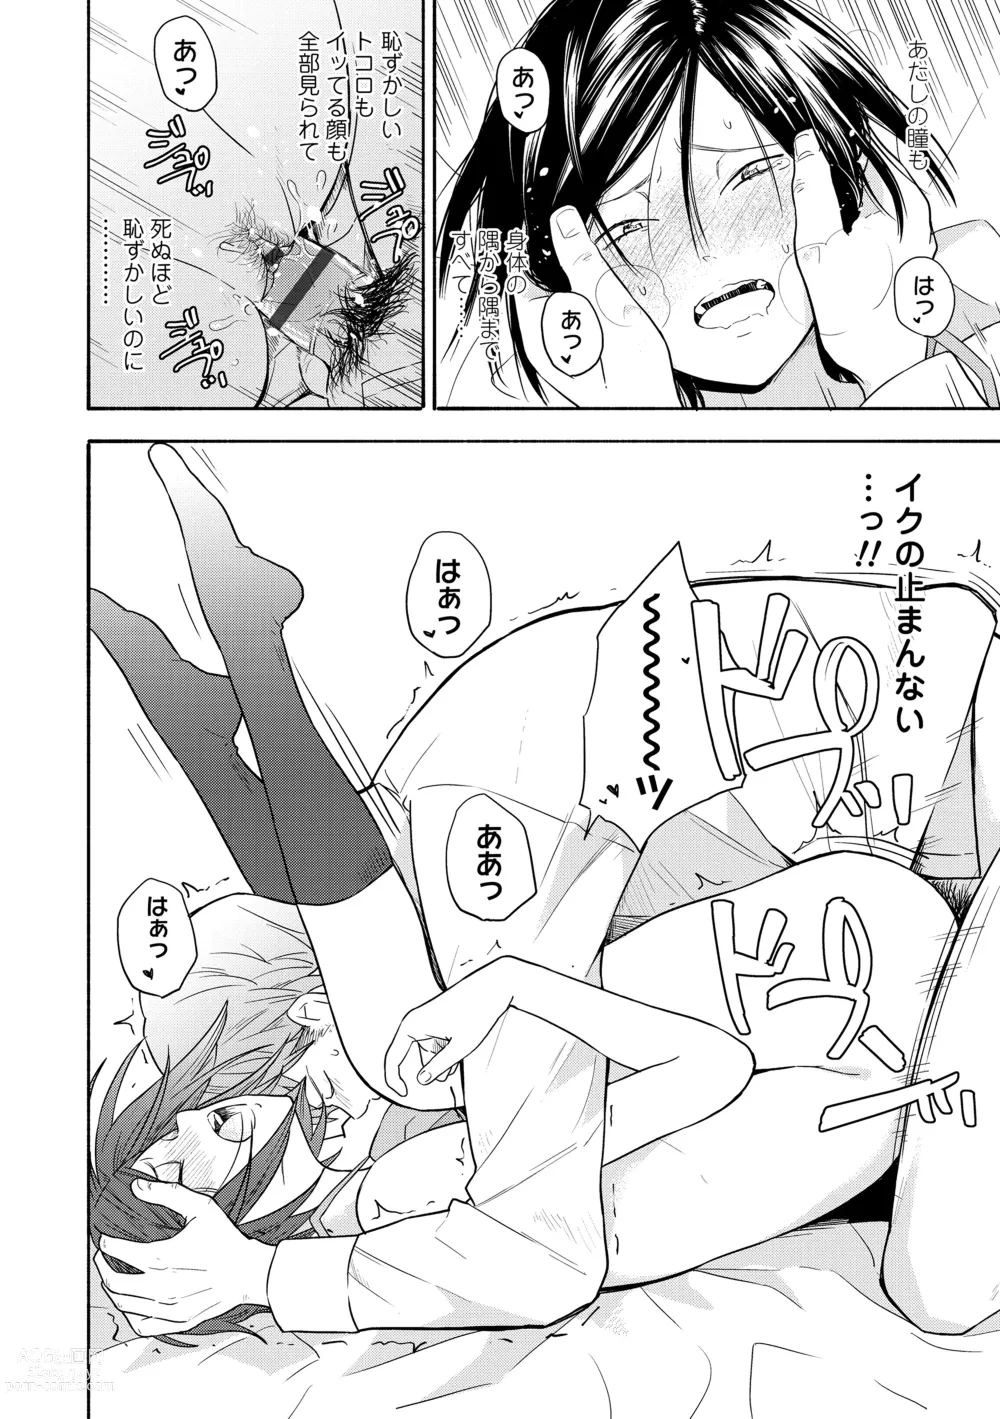 Page 24 of manga Shishunki no Eros - puberty eros + DLsite Kounyu Tokuten